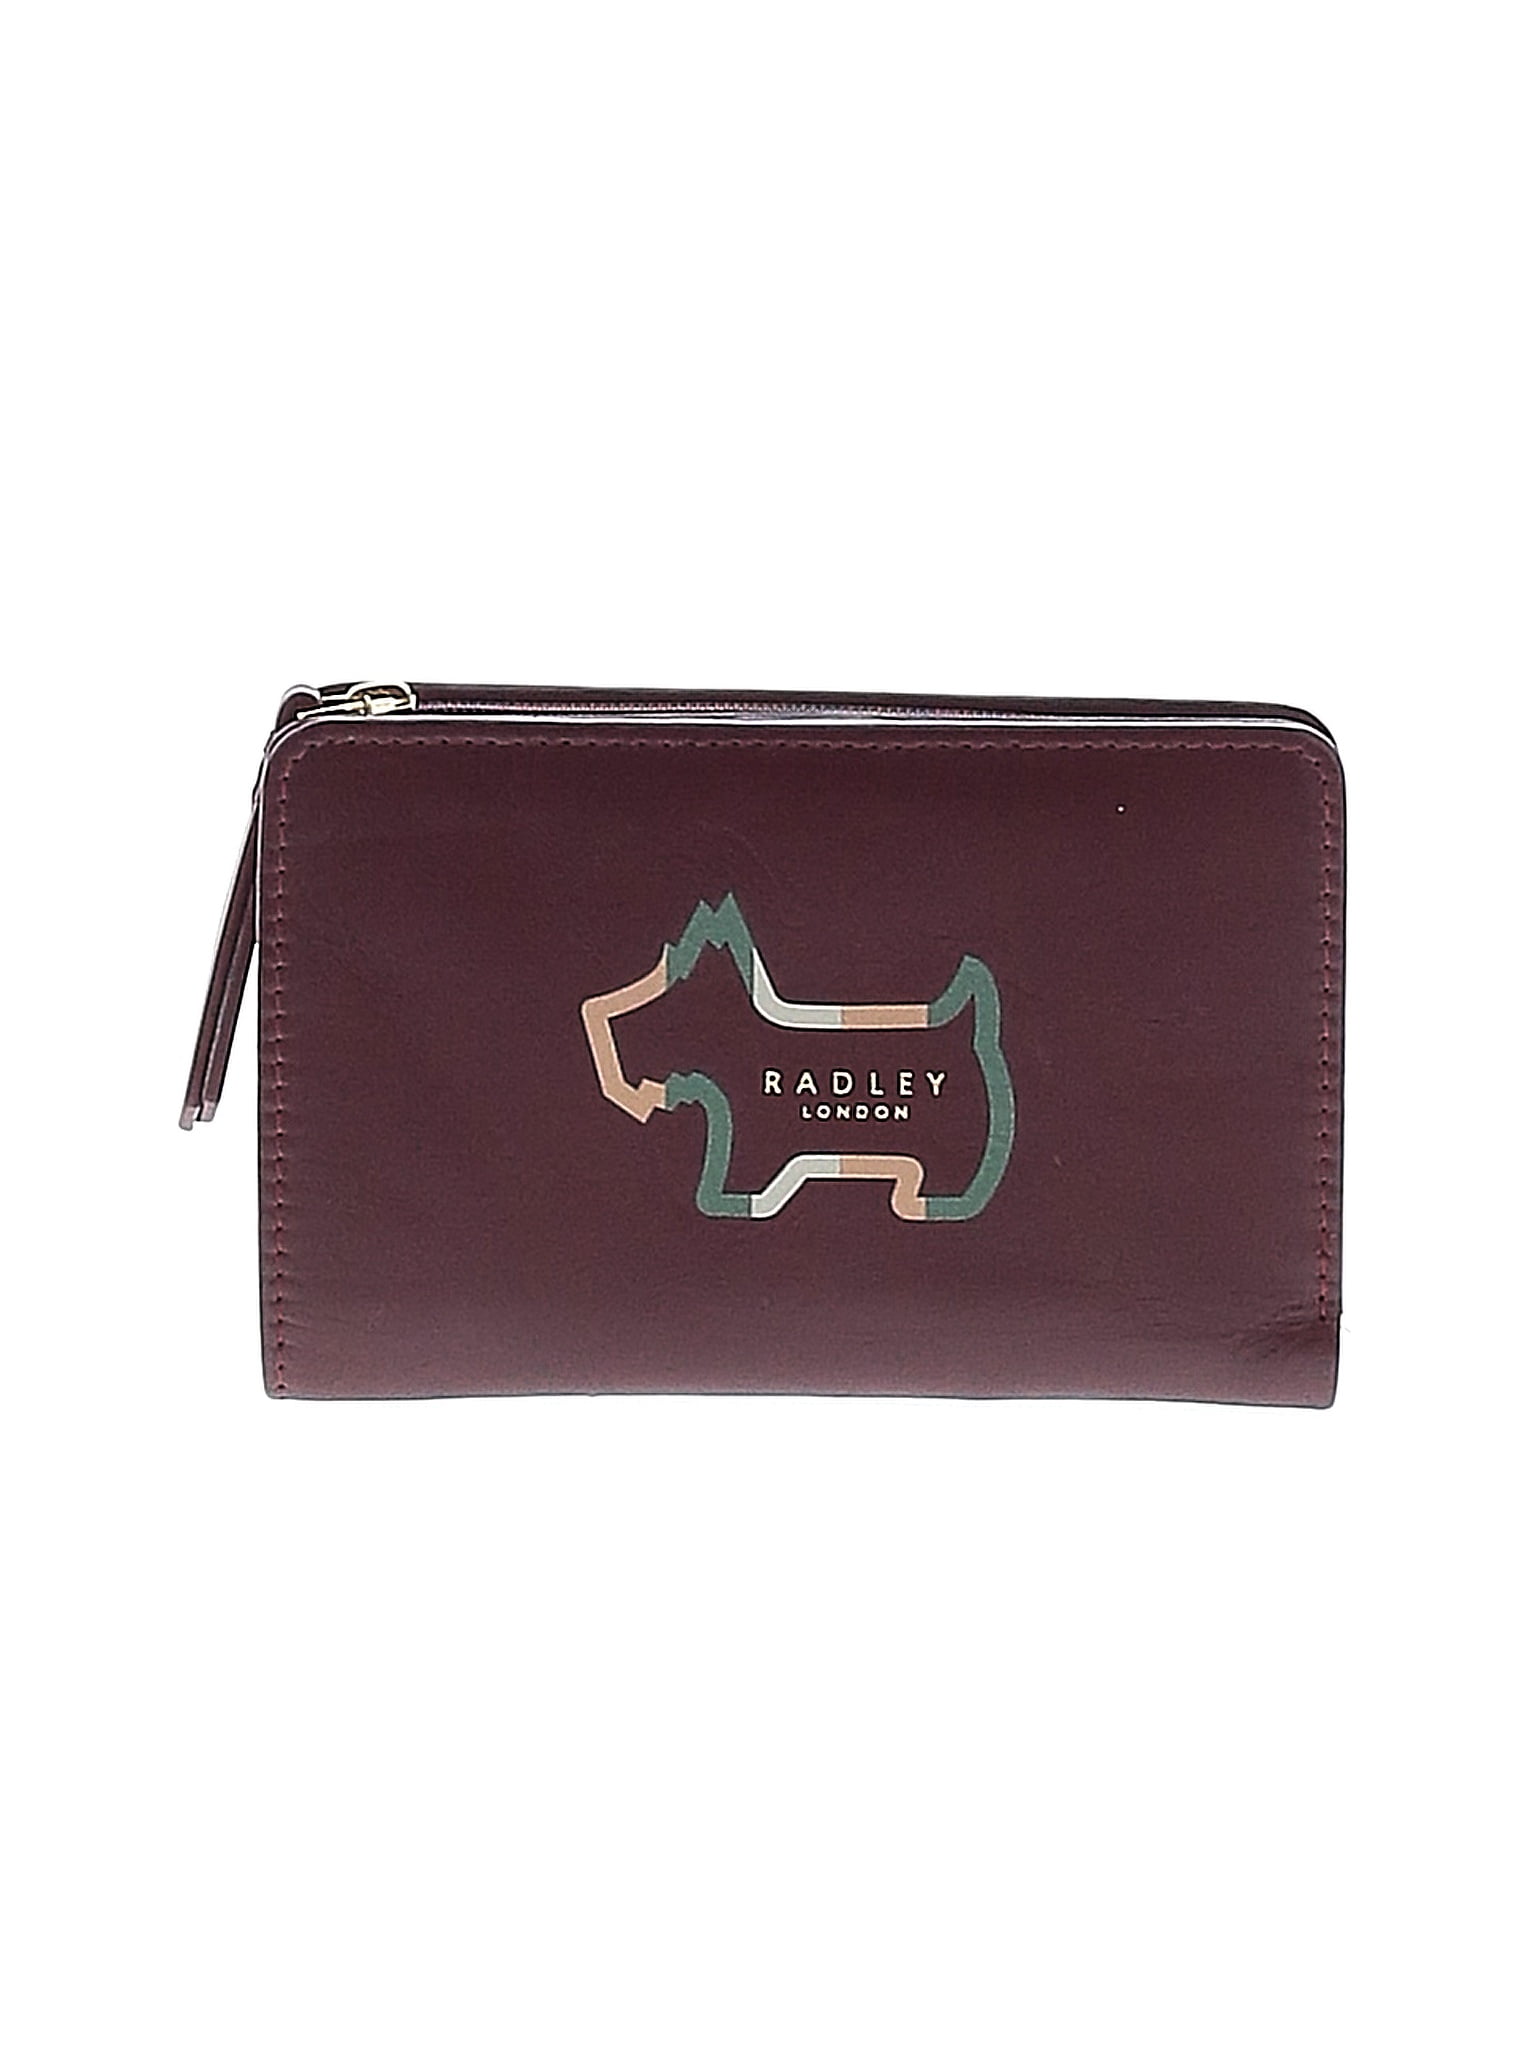 Radley London Burgundy Leather Wallet One Size - 75% off